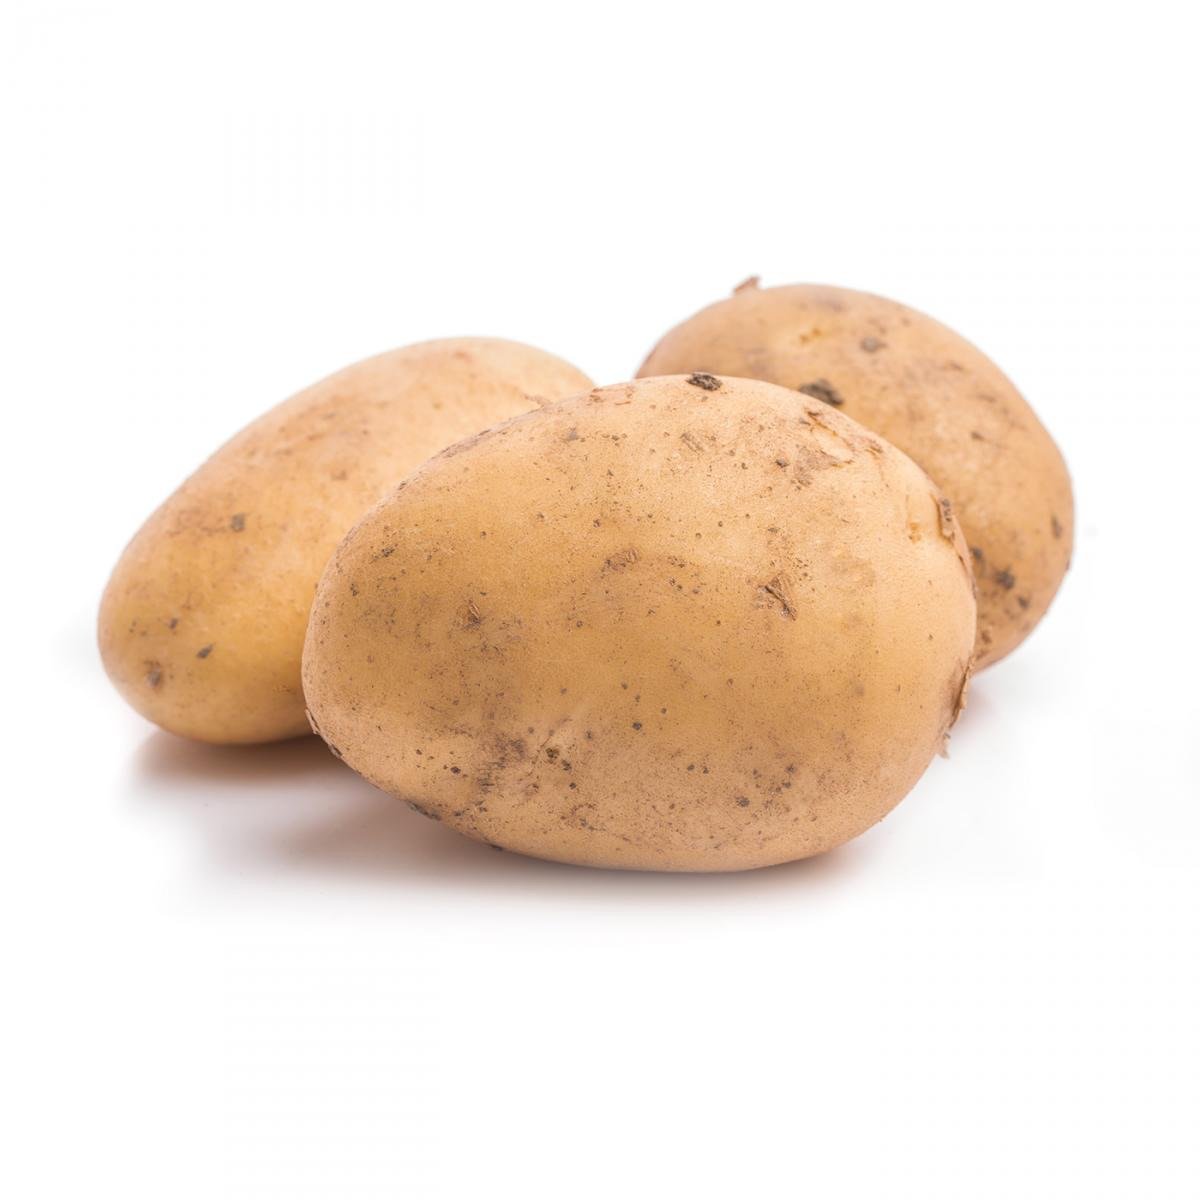 Golden Russet Potatoes - 10 Lb. Bag Of Russet Potatoes Transparent PNG -  1800x1800 - Free Download on NicePNG